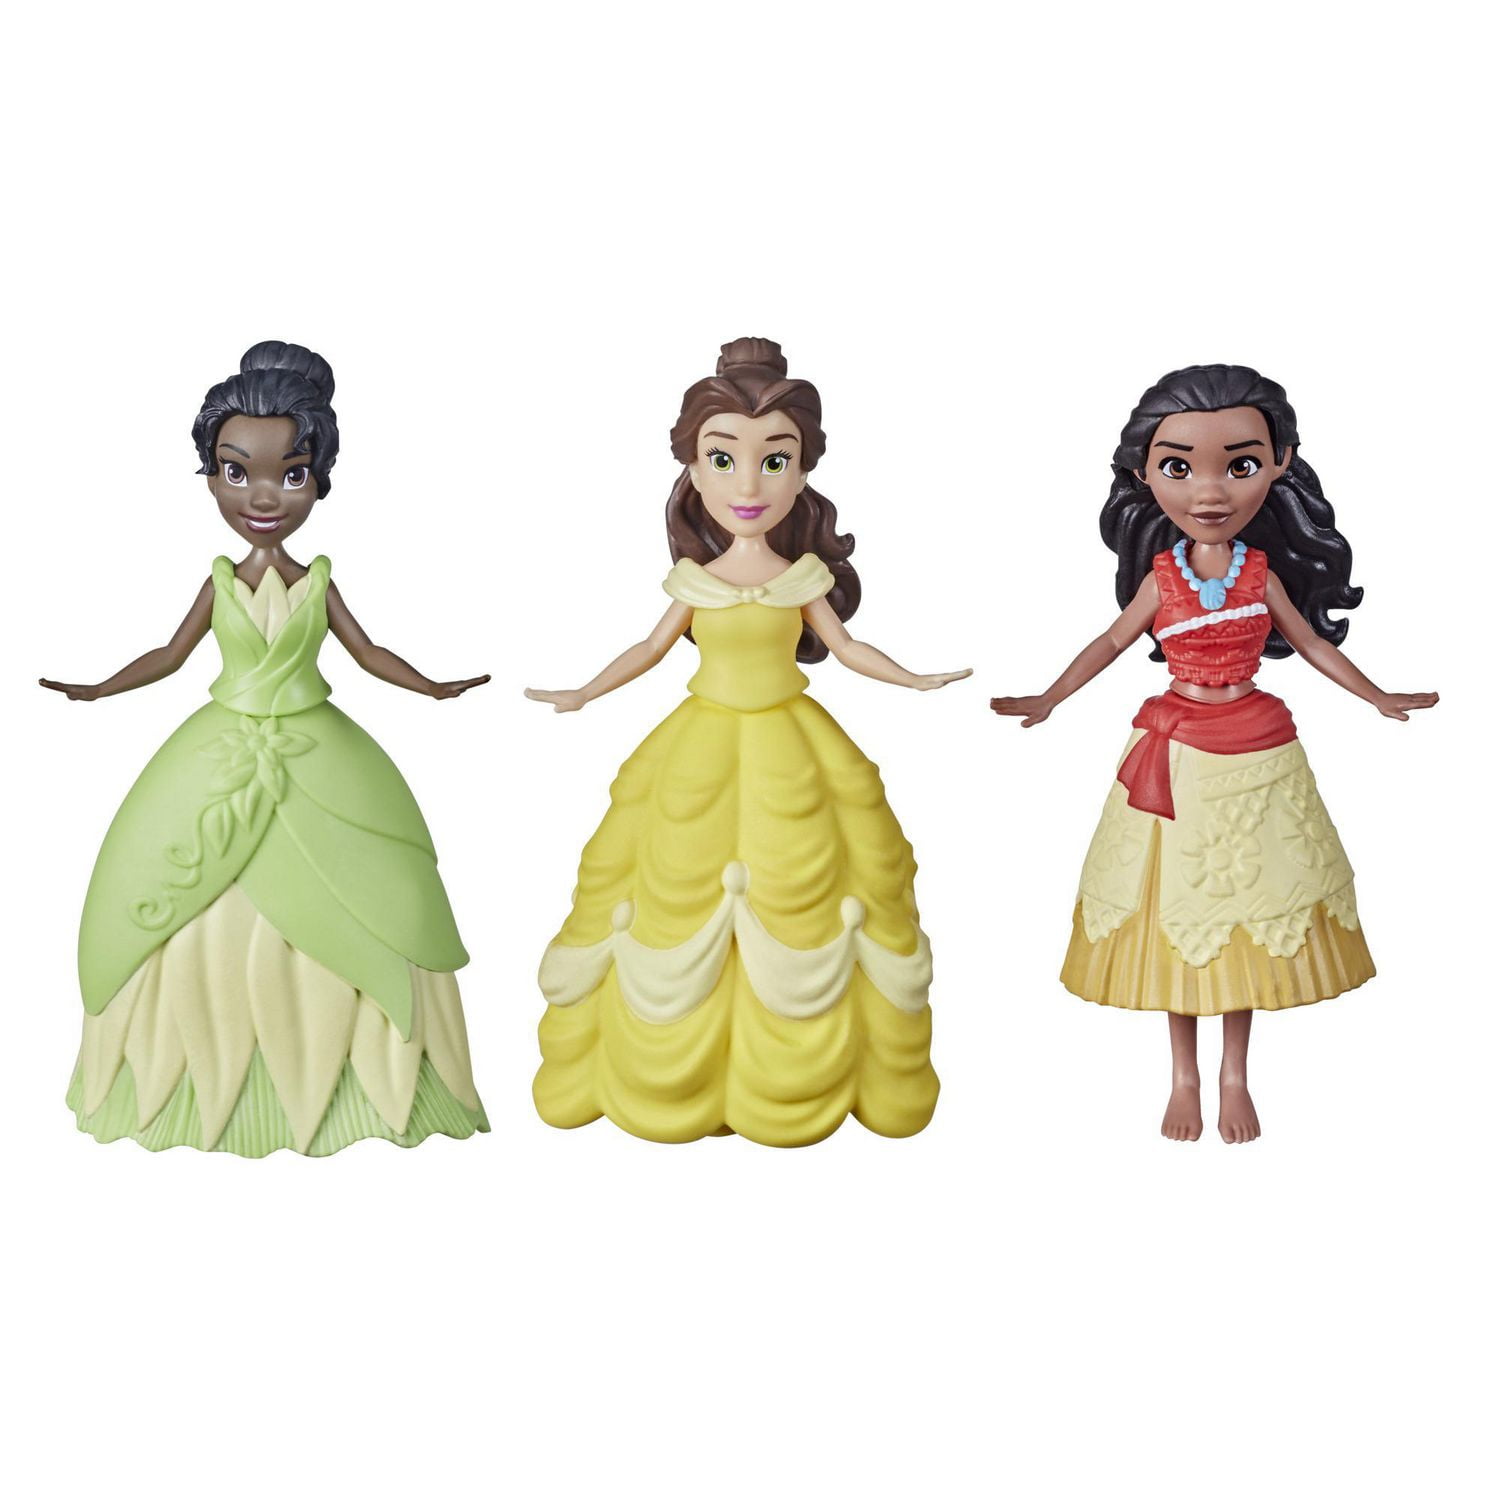 Disney Princess Secret Styles Royal Ball Collection, 12 Disney